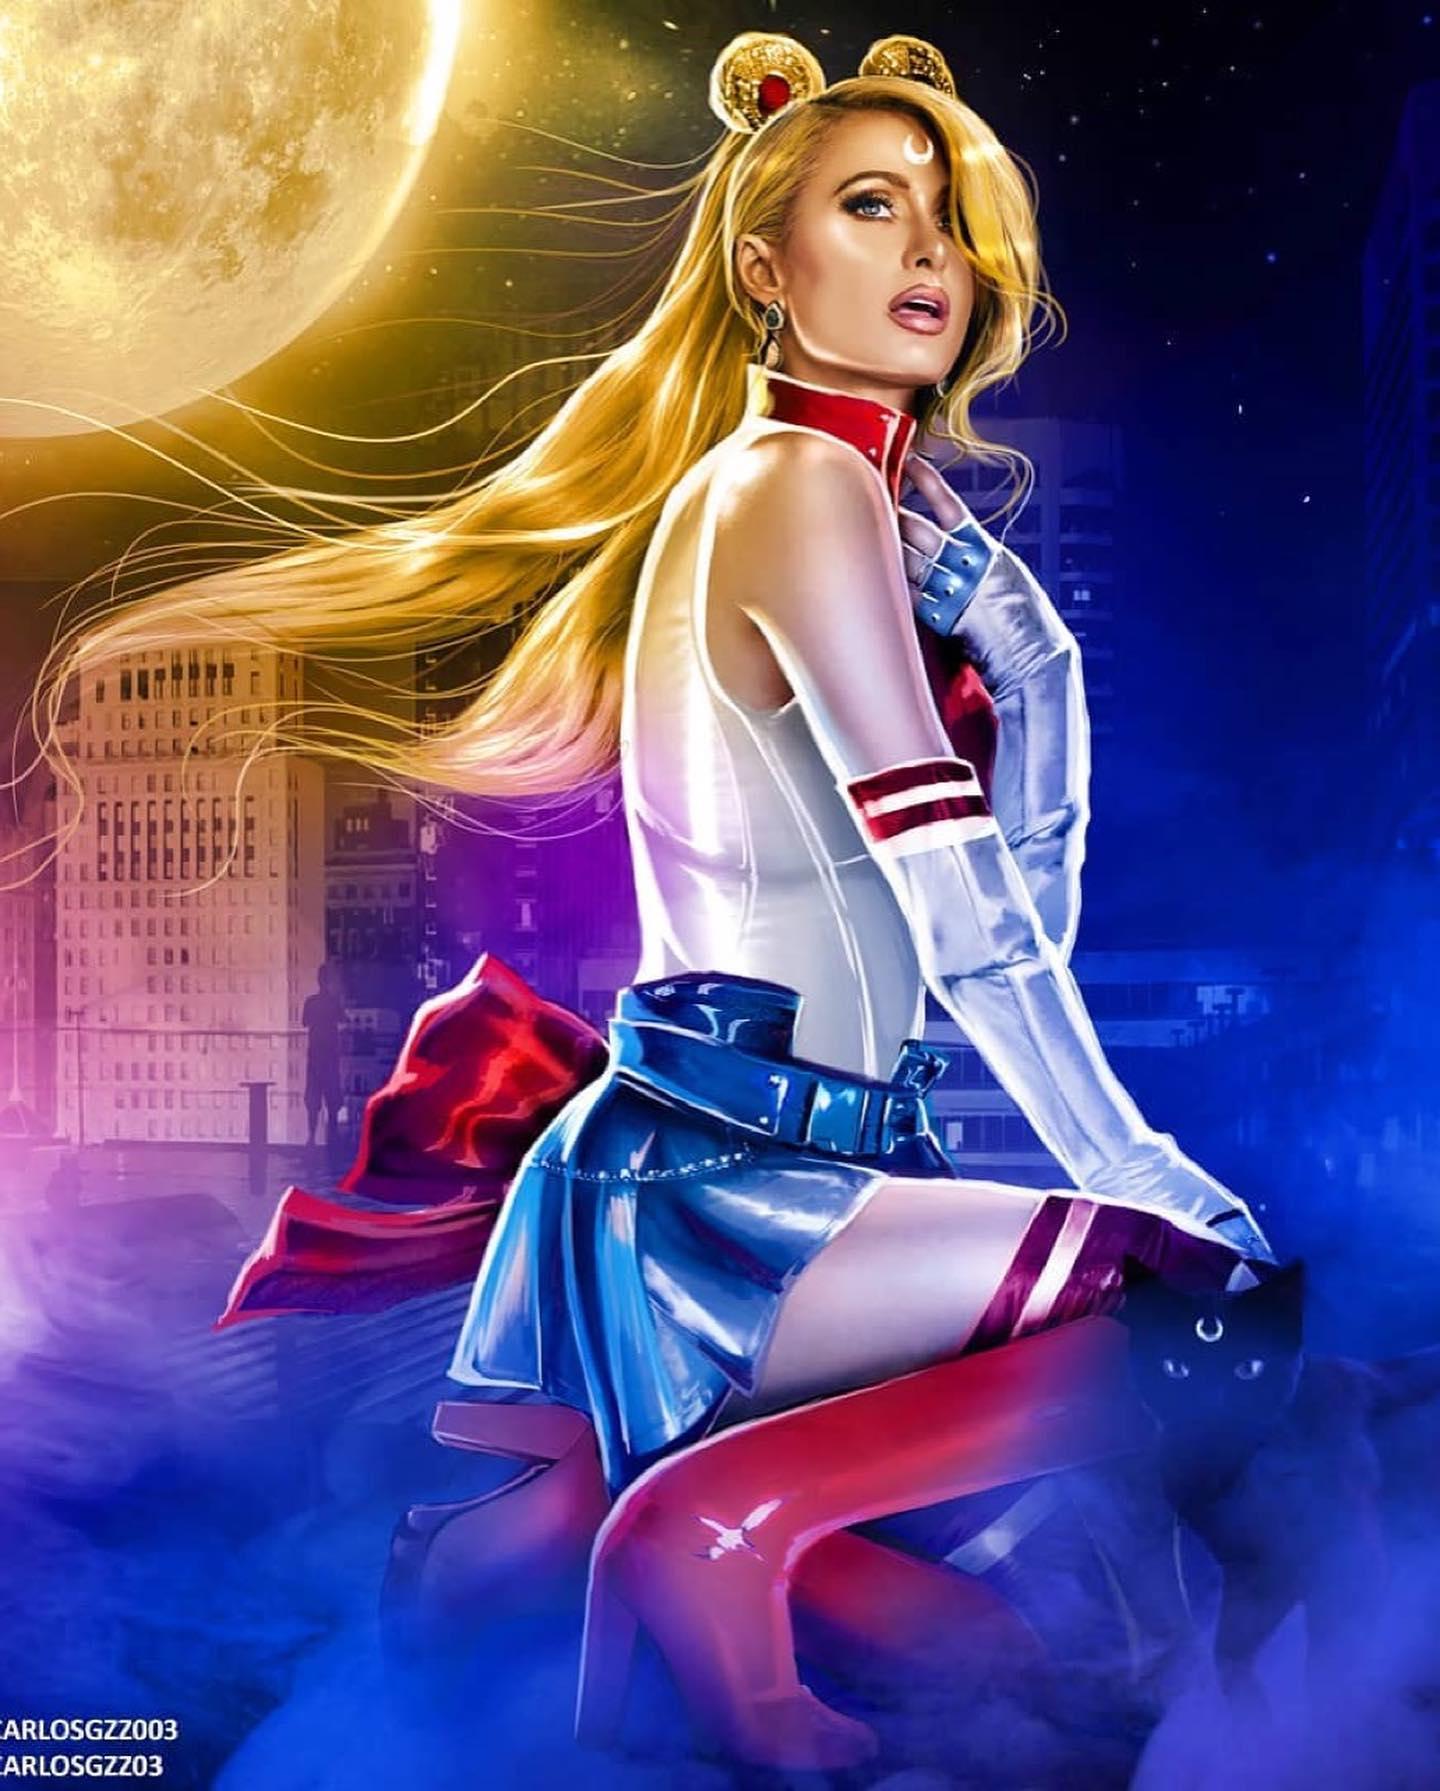 Paris Hilton dresses as Sailor Moon for Halloween